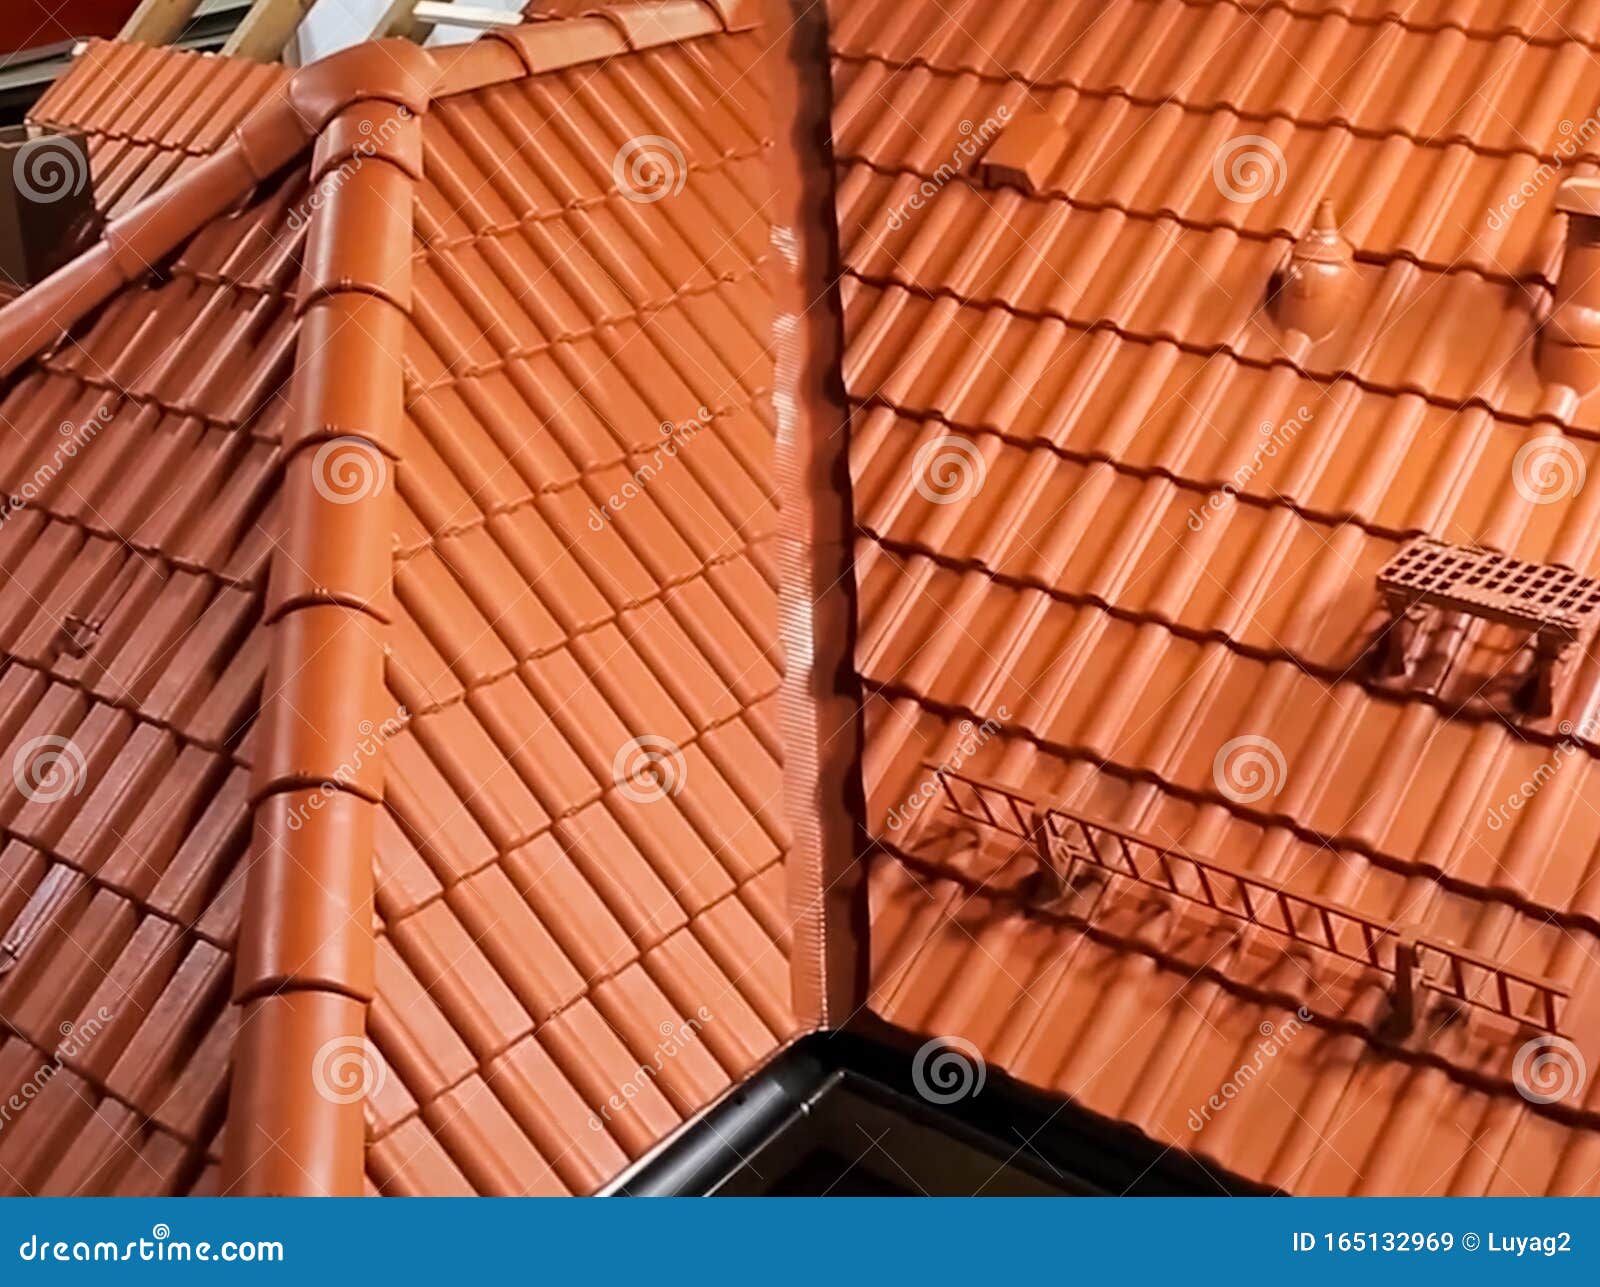 Orange Ceramic Tile on Roof. Roof Tile Stock Image - Image of